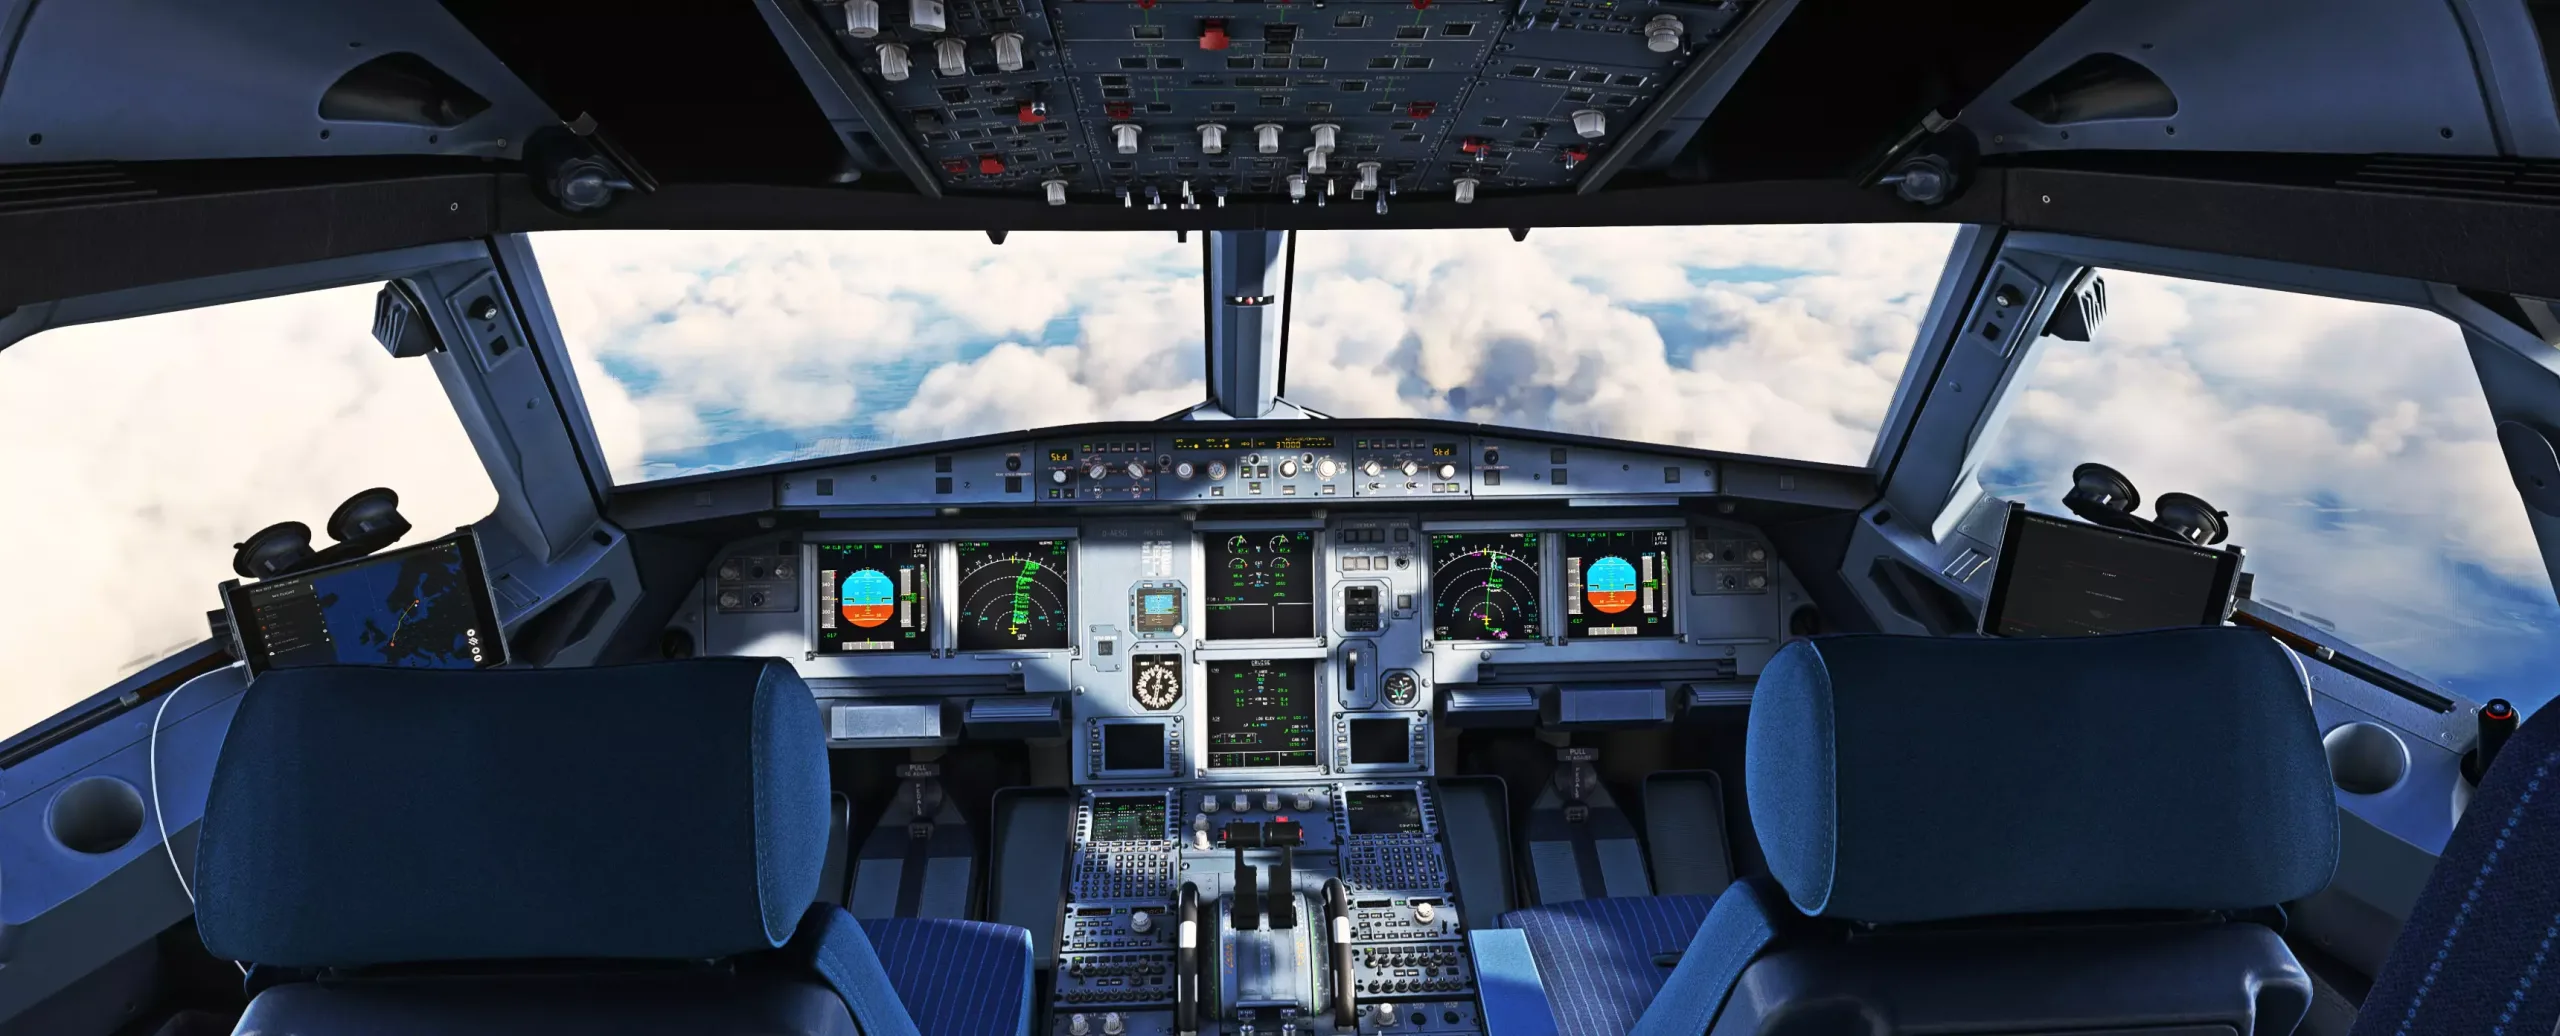 euroSKIES virtual airline Airbus cockpit of member flying above clouds